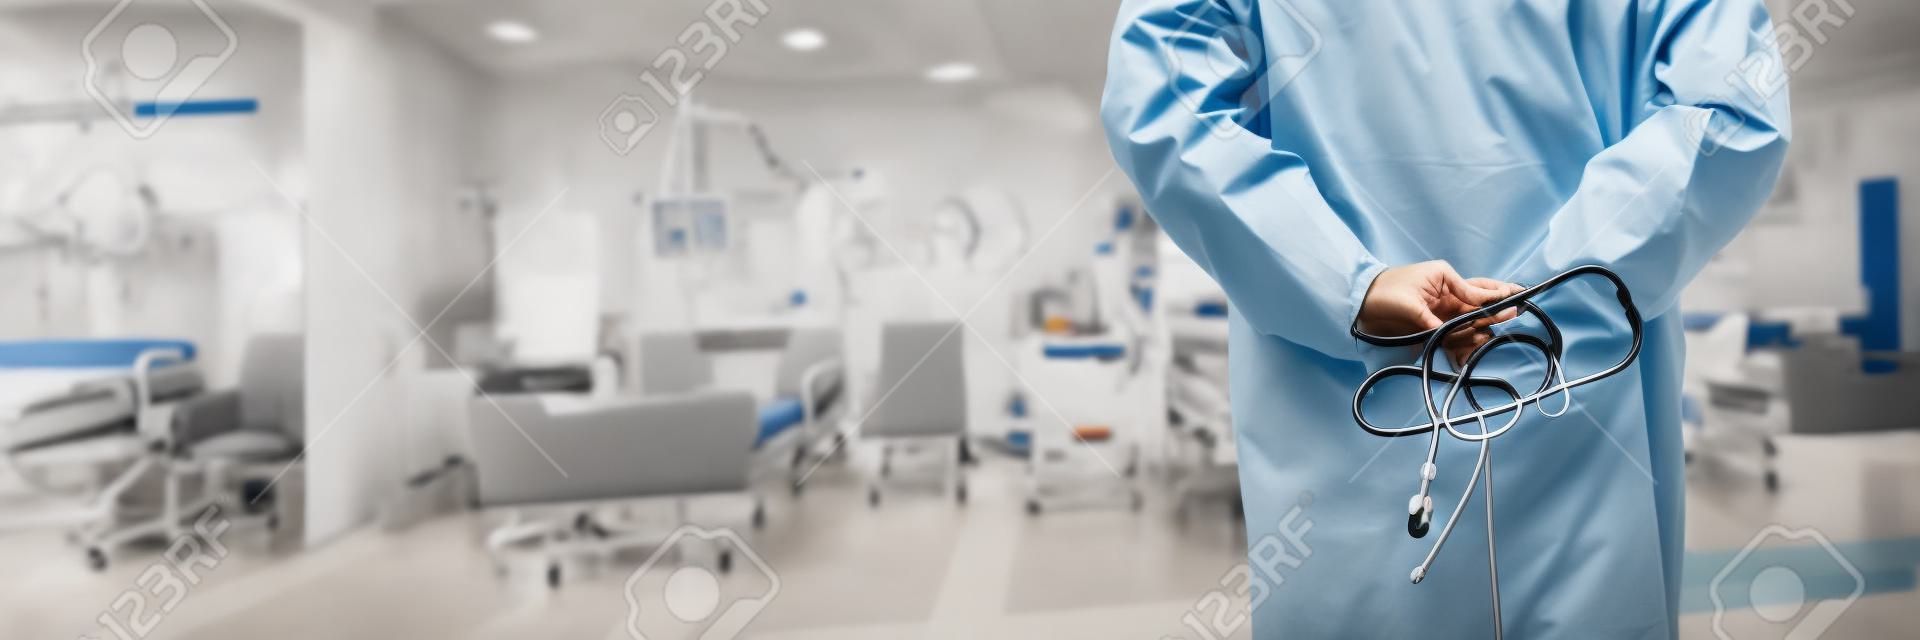 vista posterior de un hombre médico con estetoscopio en sala de hospital.